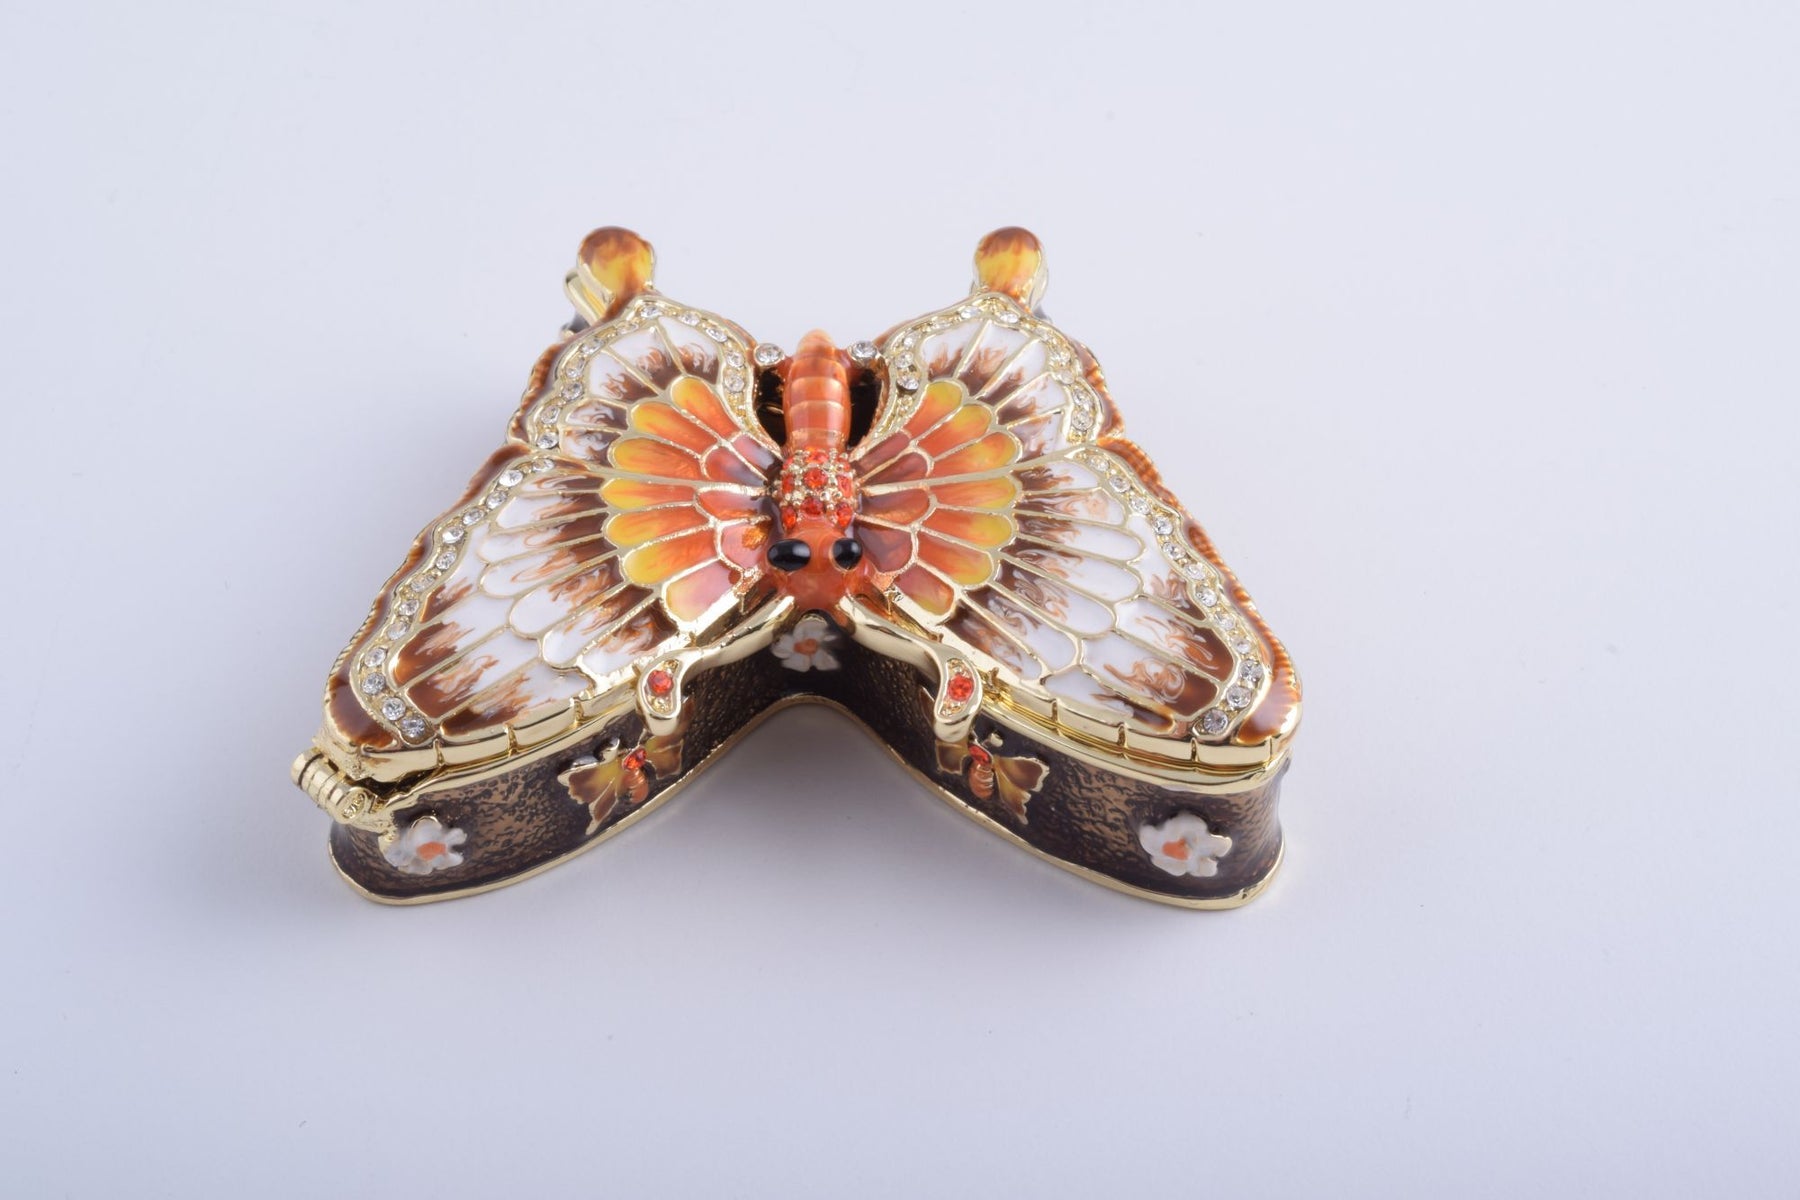 Keren Kopal Fire Butterfly  61.50